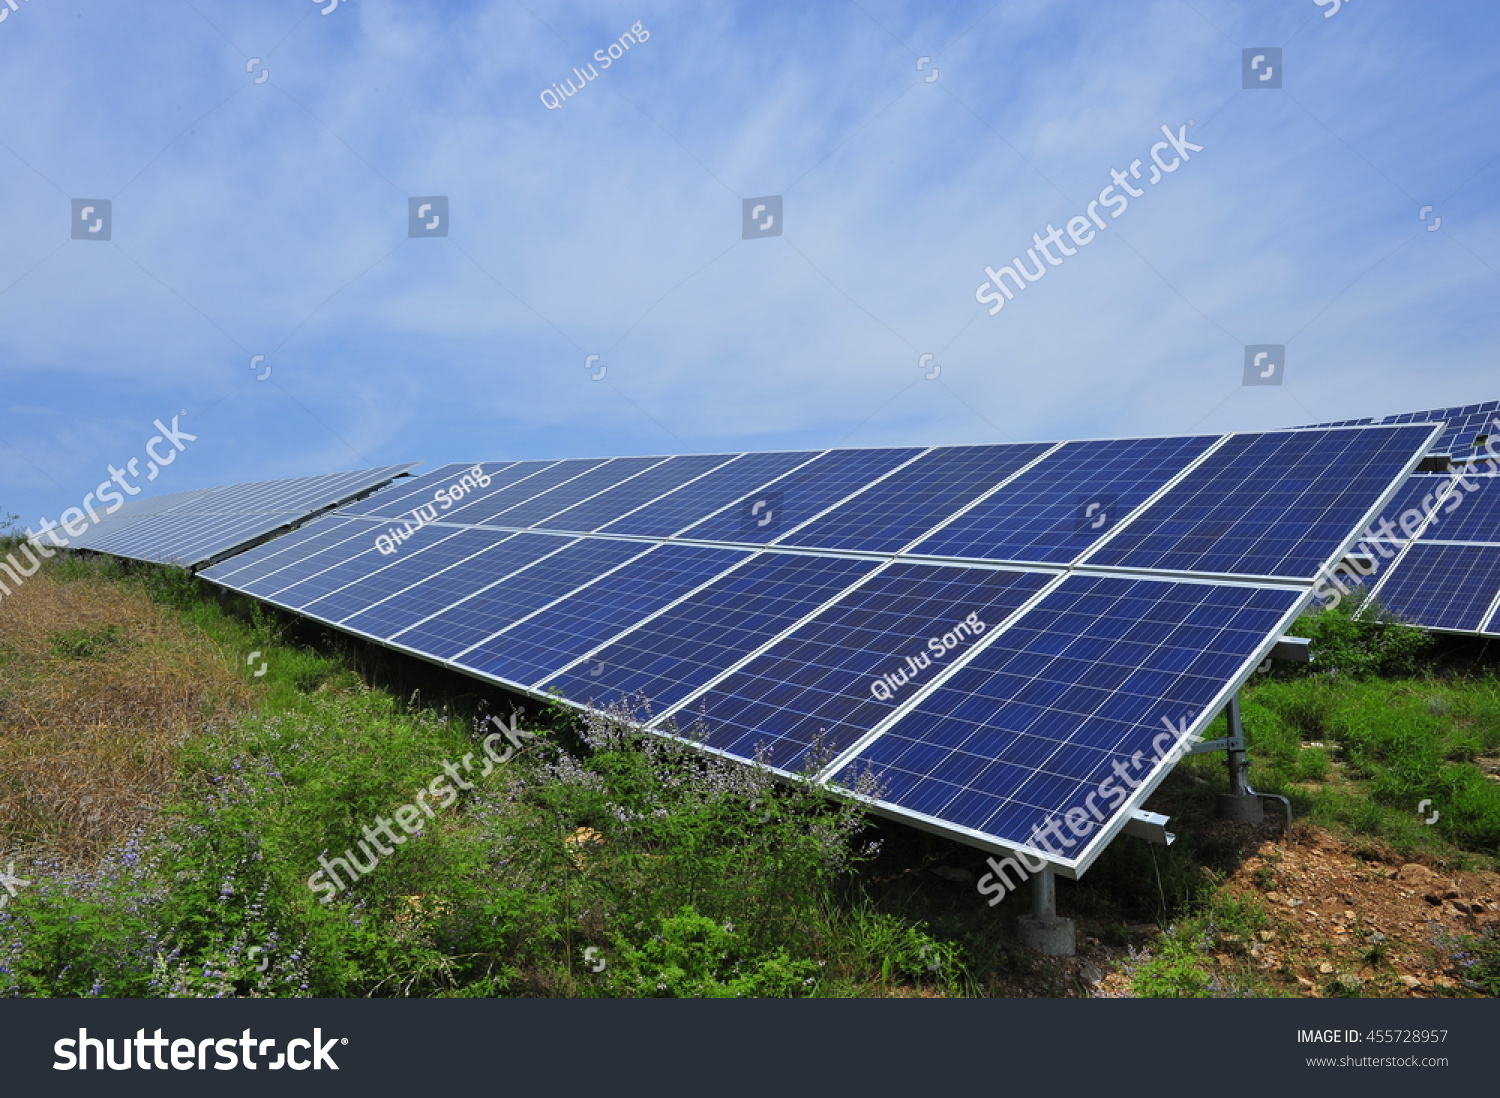 Solar Power Equipment Stock Photo 455728957 : Shutterstock